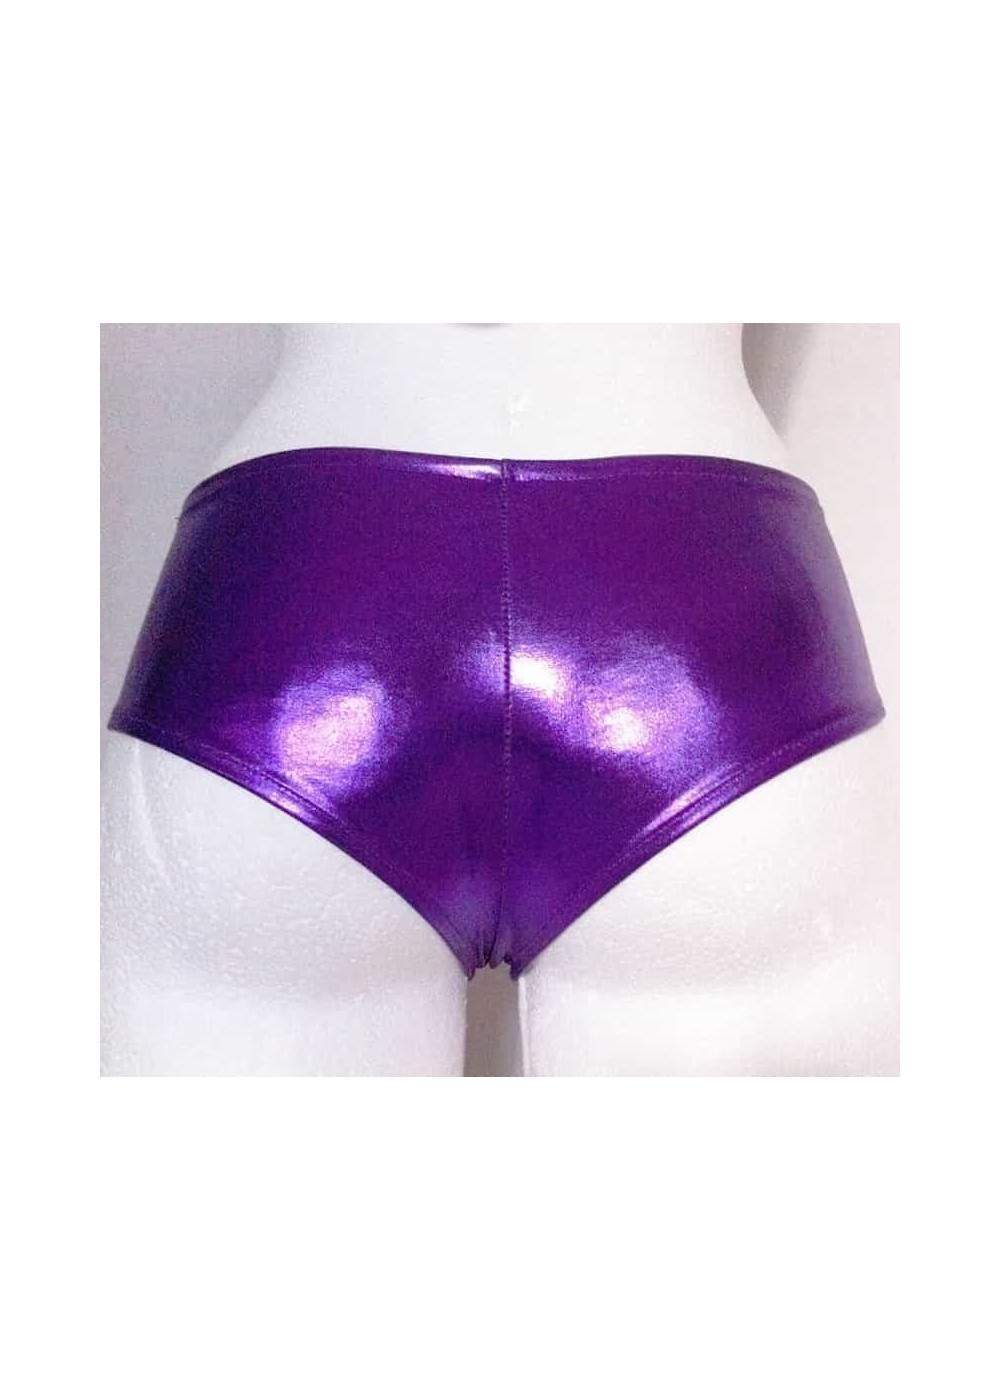 Leather Look Hotpants purple metallic - 